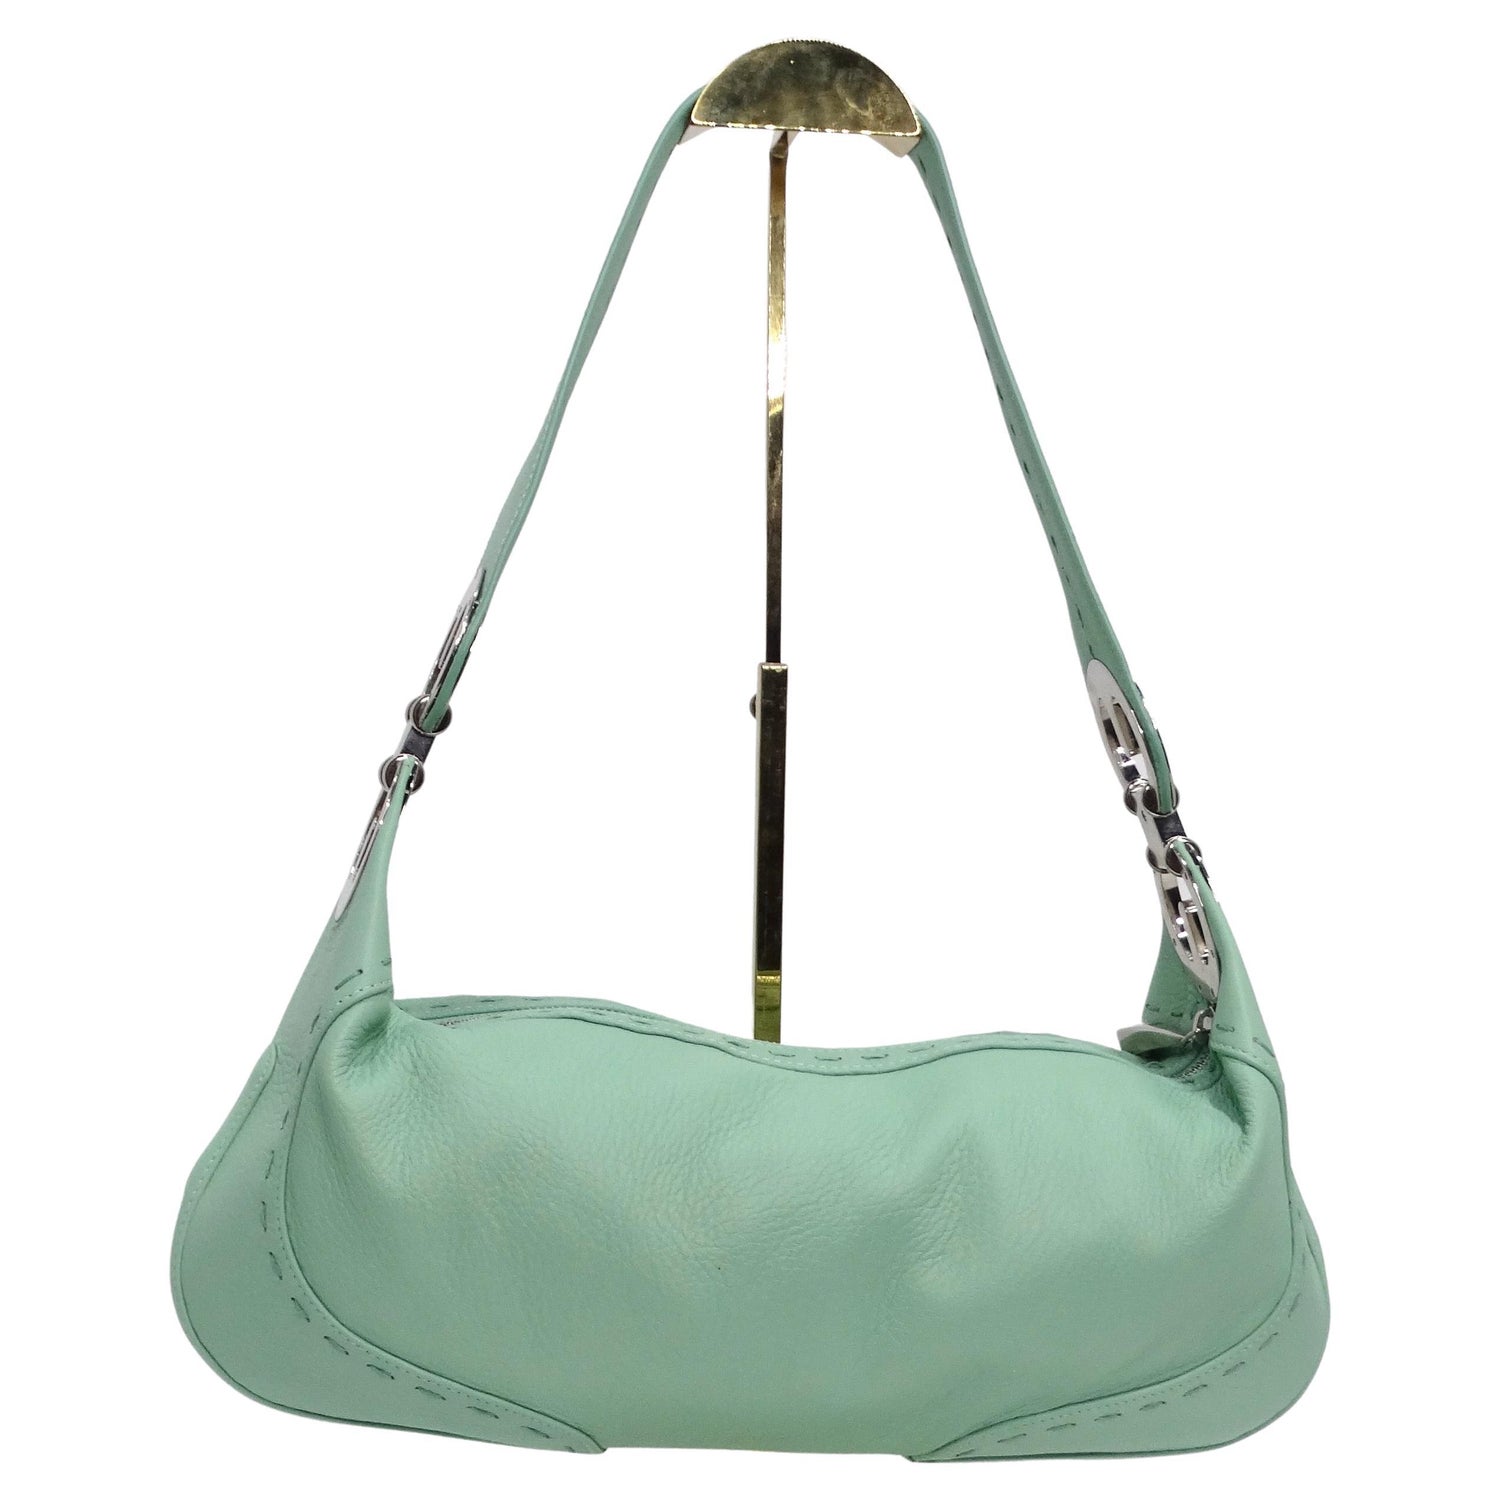 Prada Saffiano Lux Crossbody Bag Light Pink, $960, Neiman Marcus